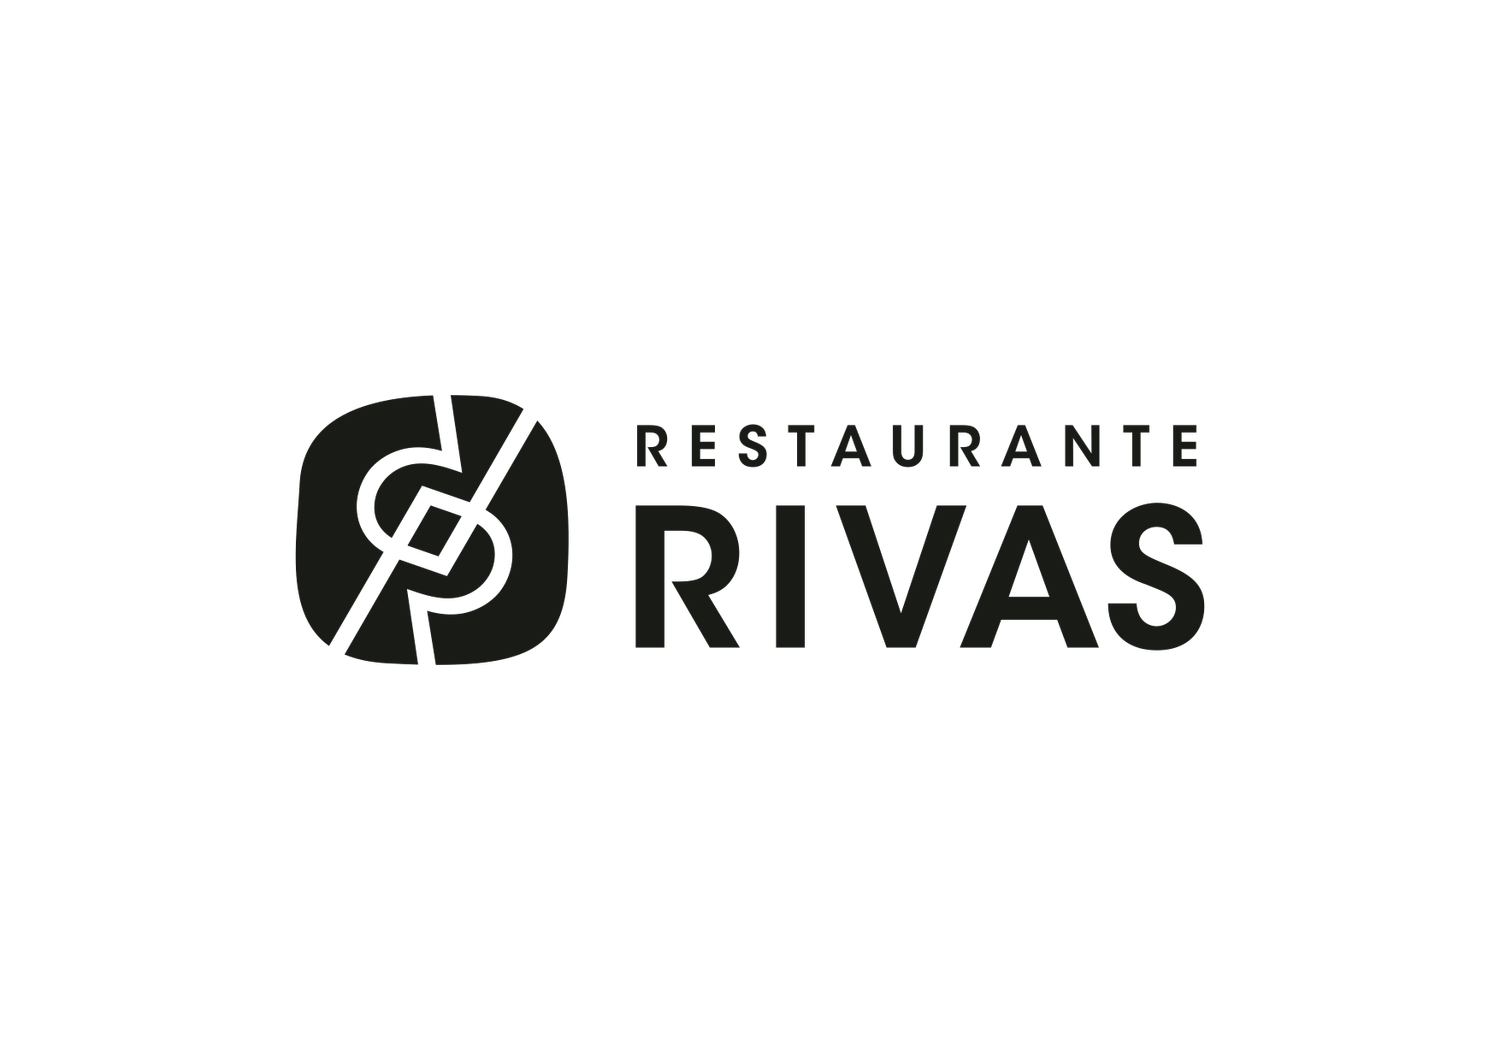 Restaurante Rivas